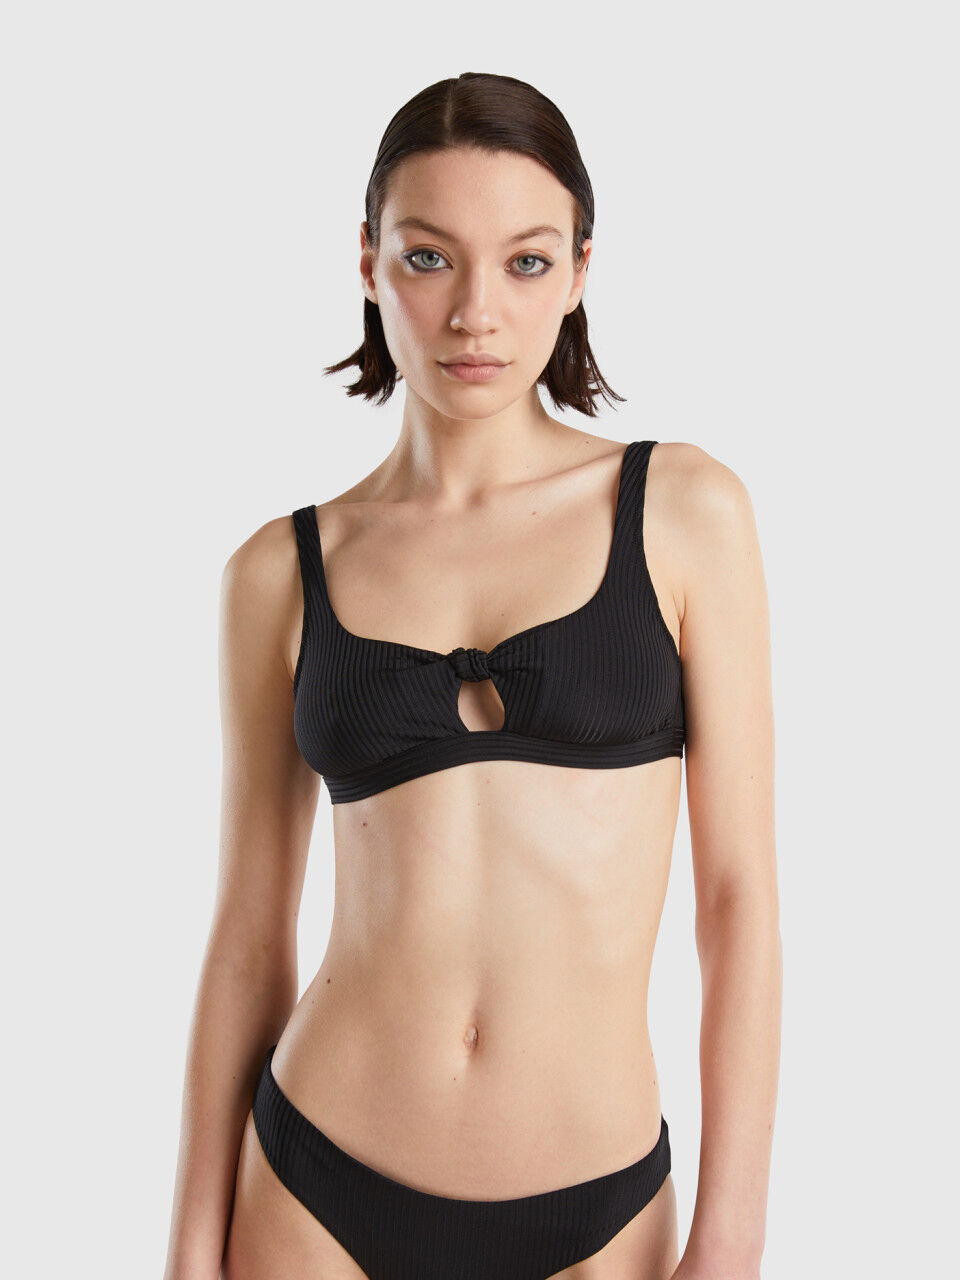 Brassiere bikini top in recycled nylon